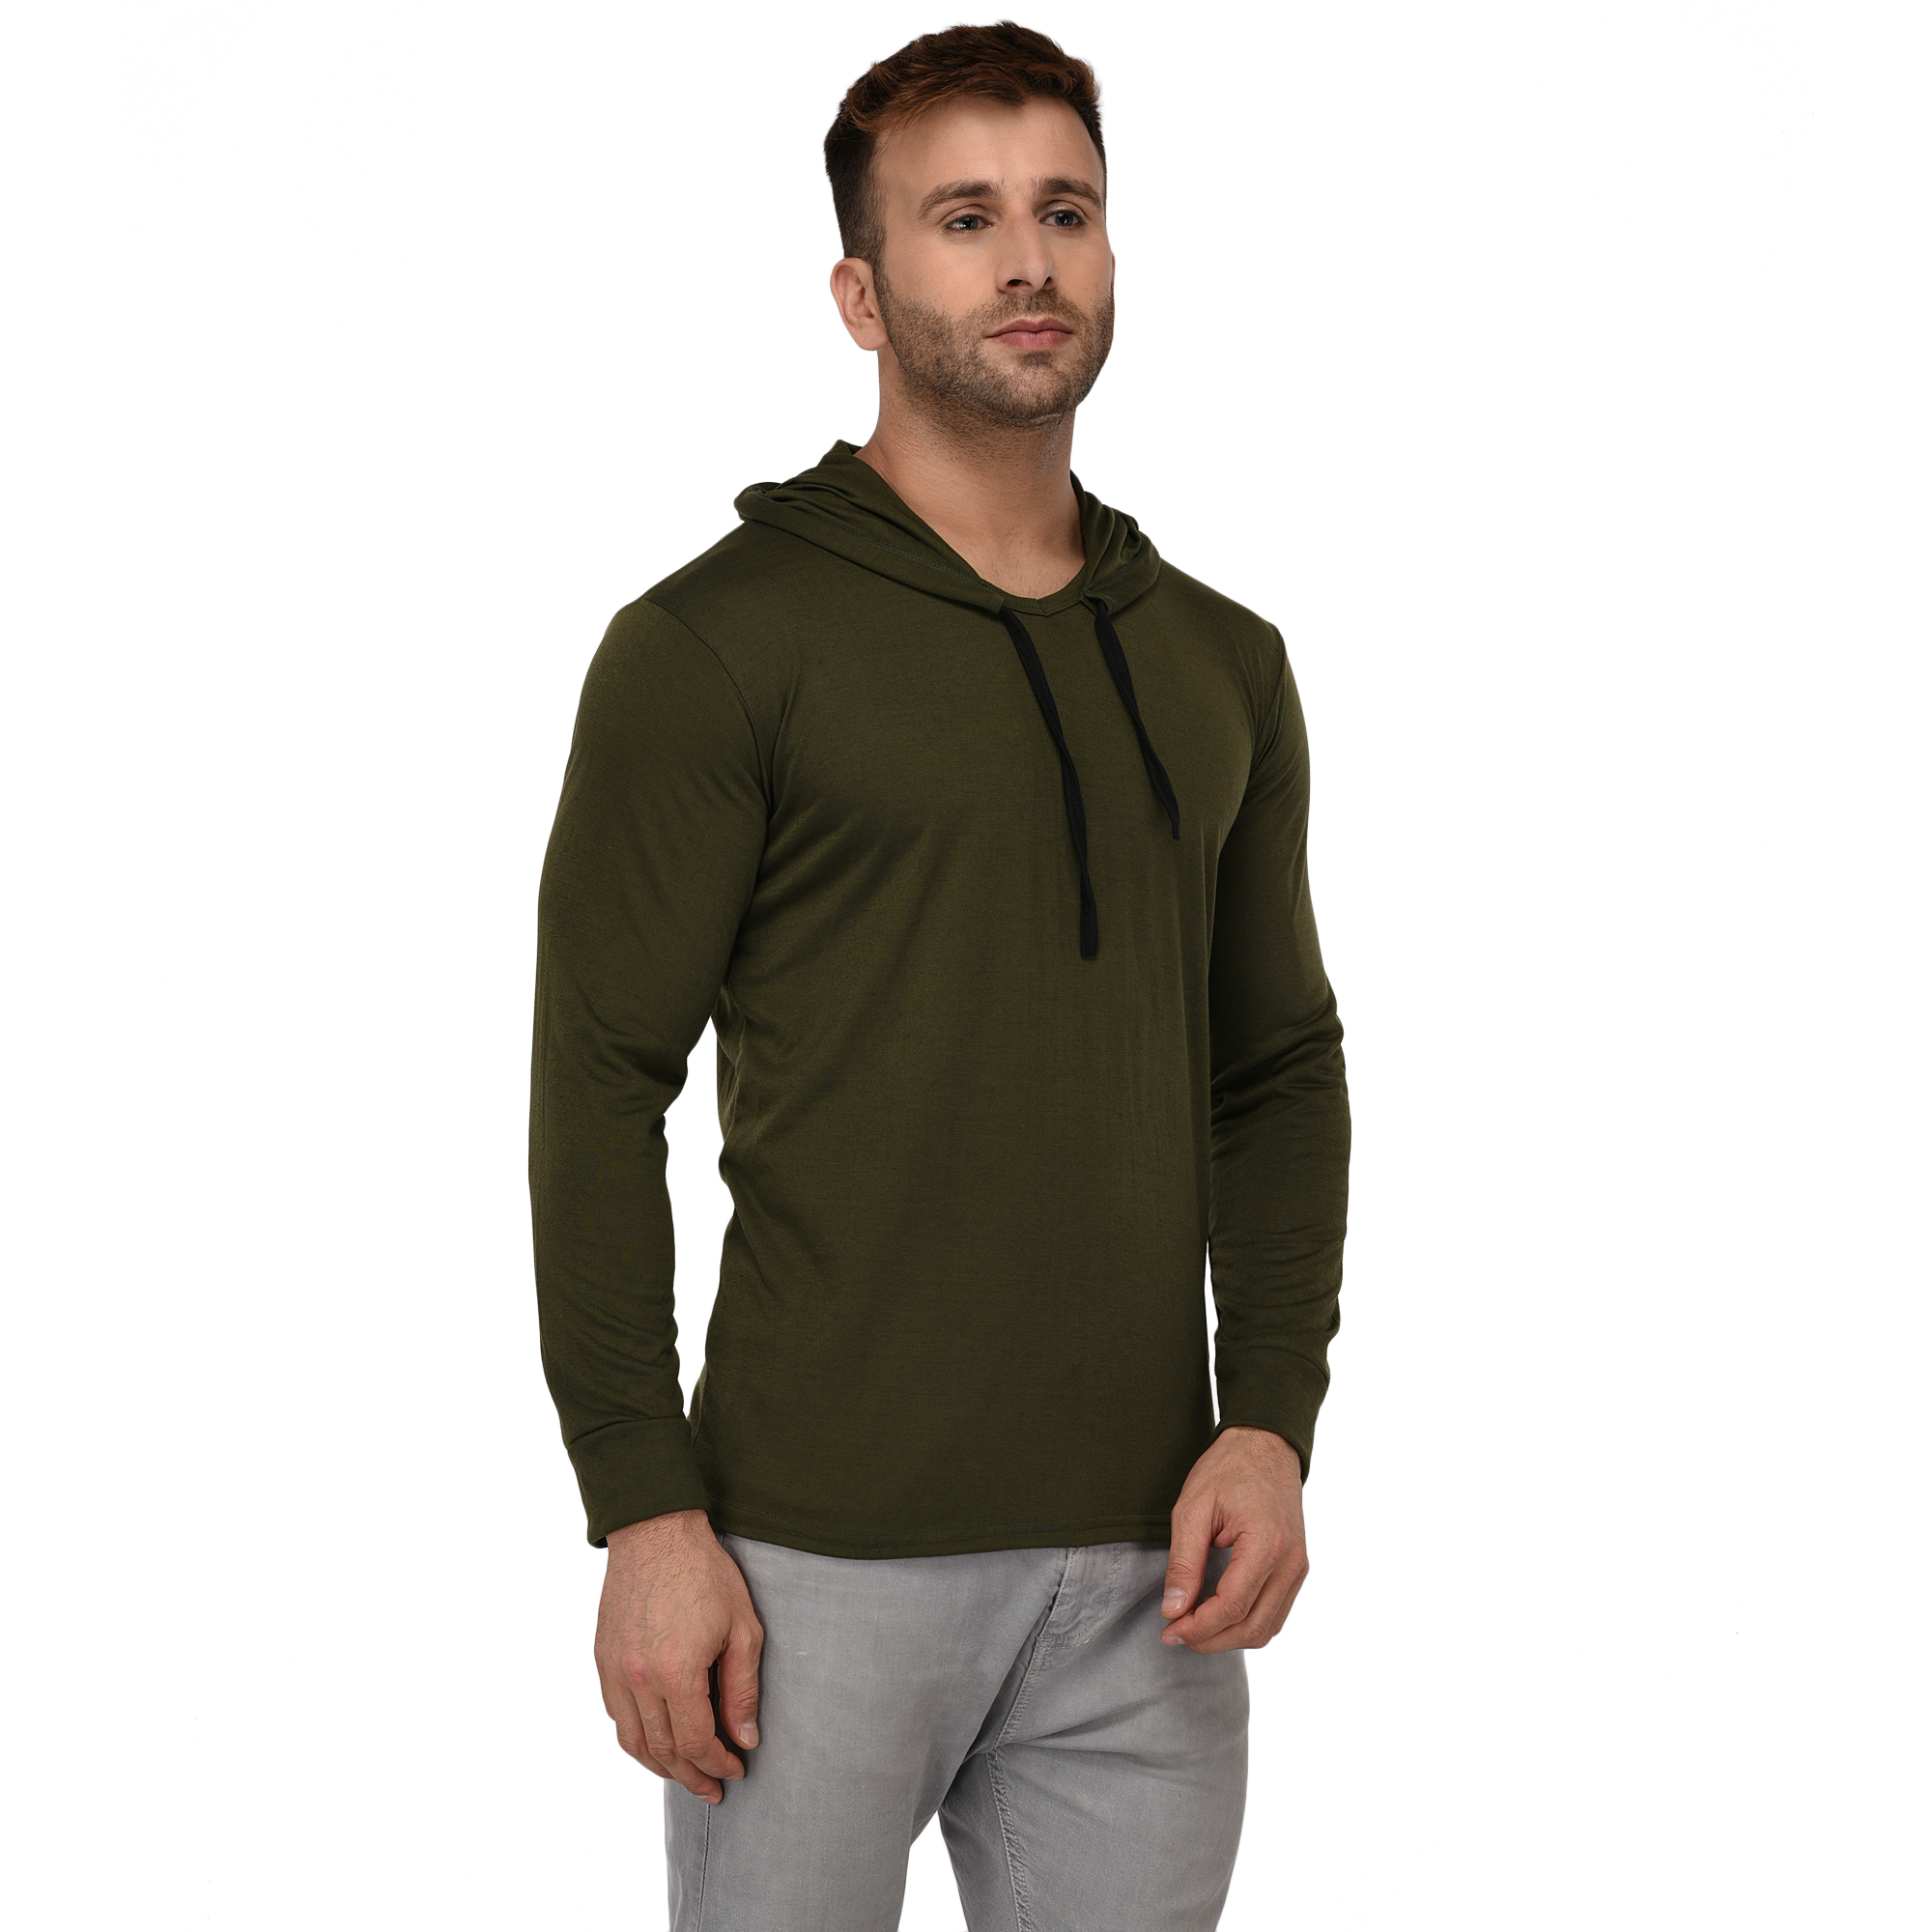 Buy Adorbs Solid Men's Hooded Dark Green T-Shirt Online @ ₹350 from ...